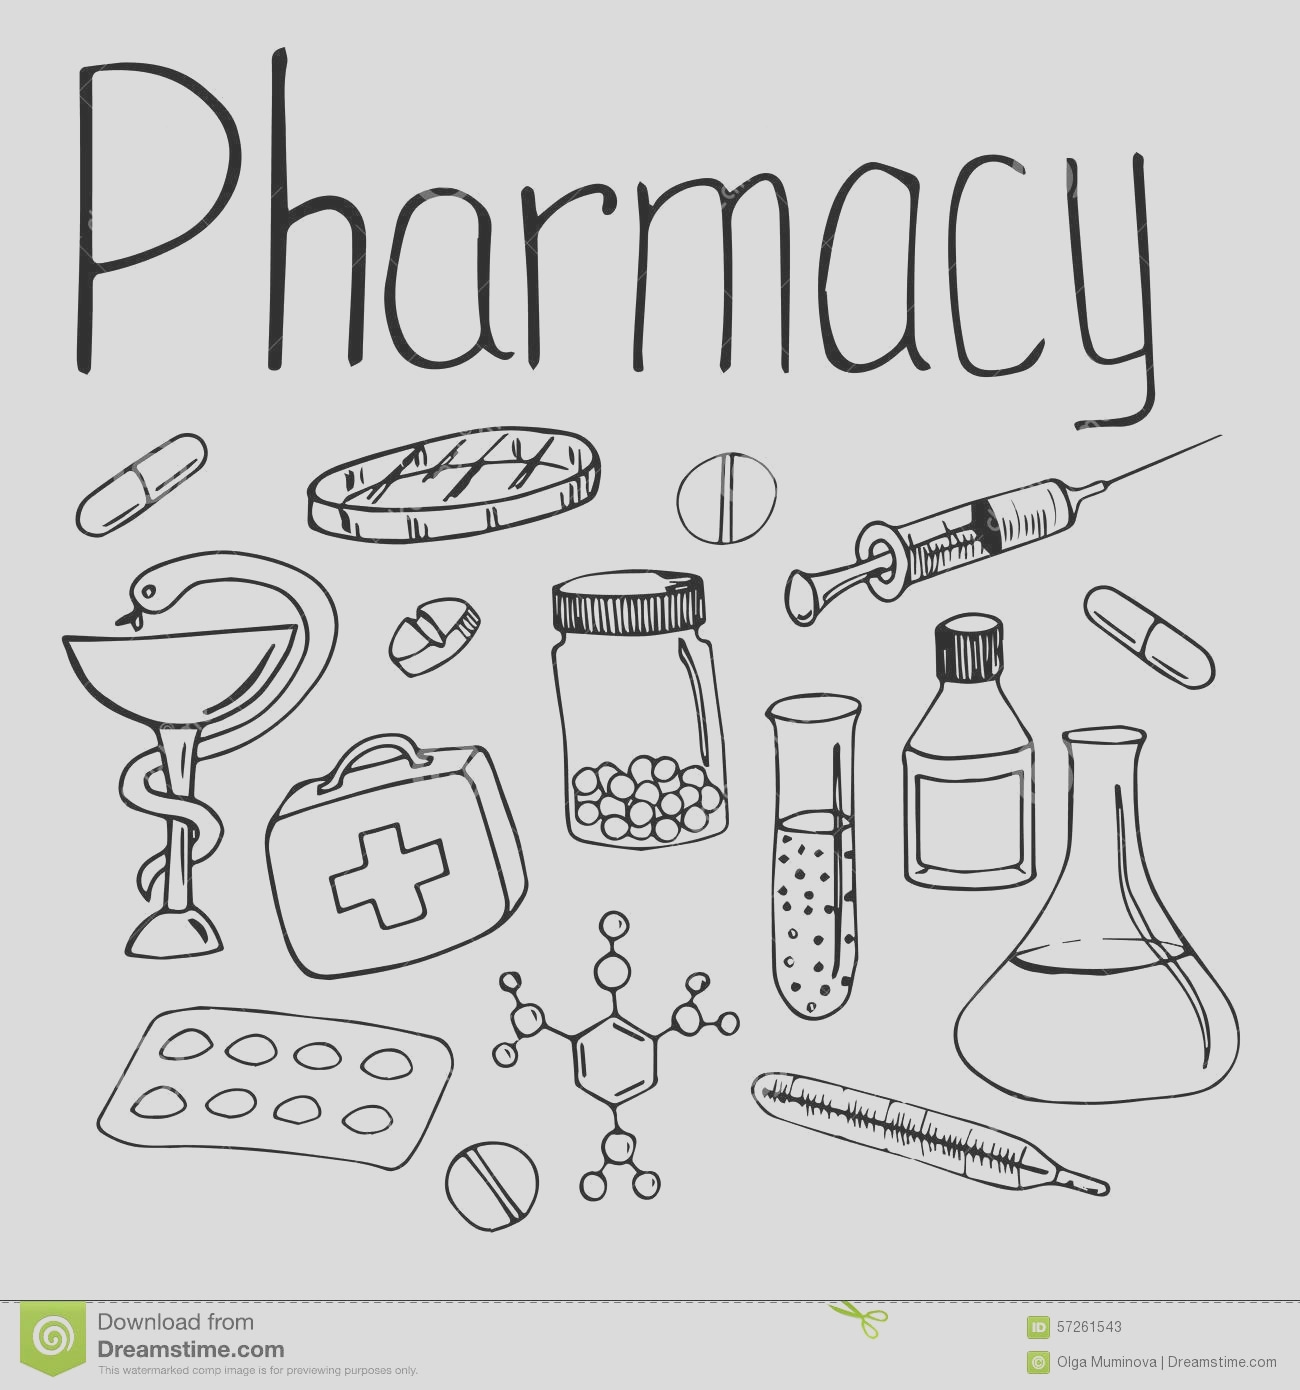 Pharmacist #3